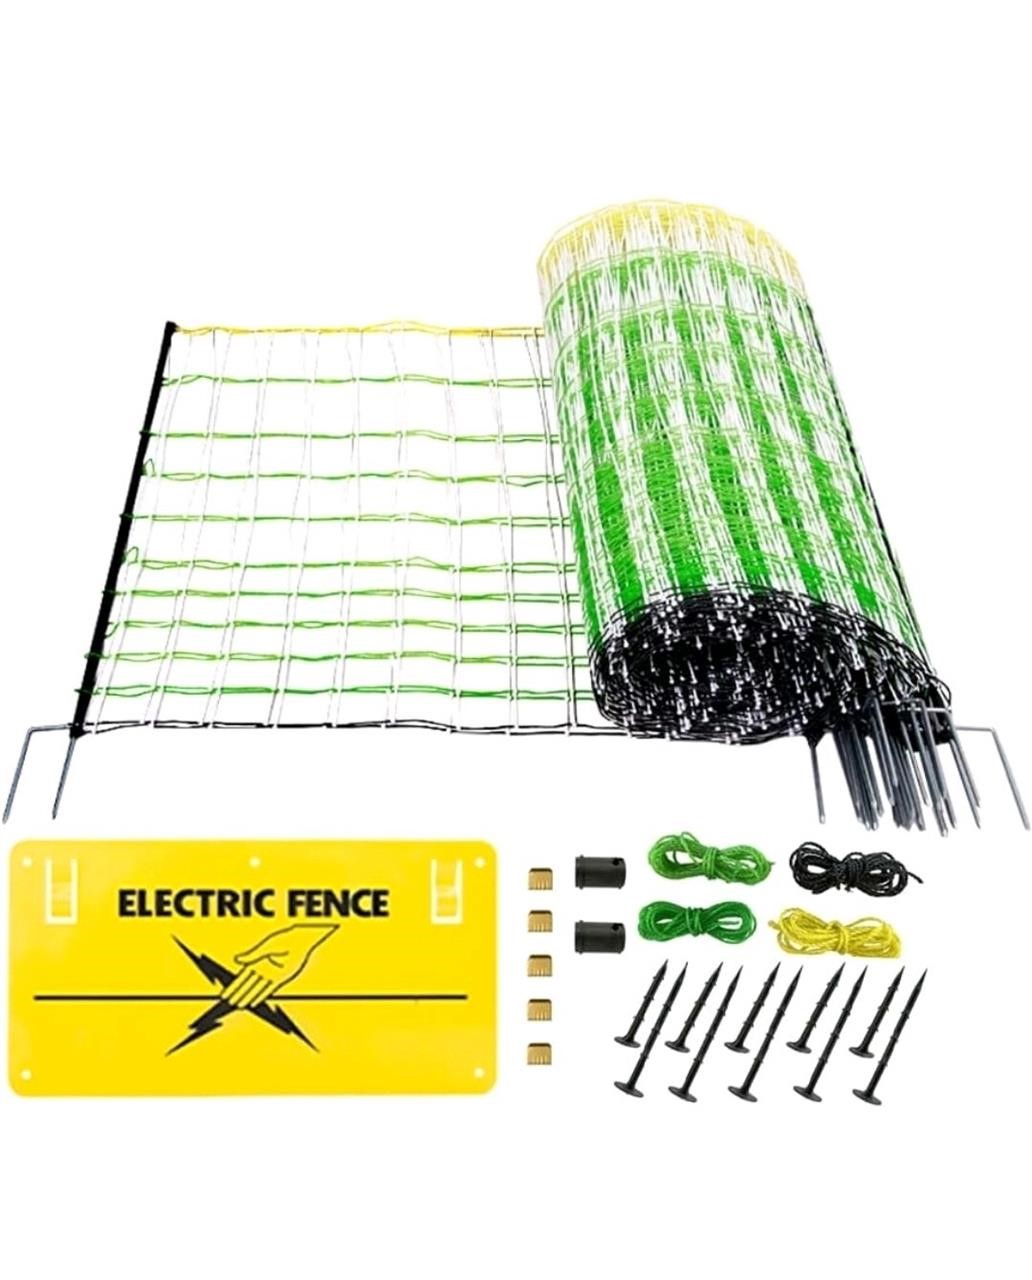 Electric Fence Netting semi-Rigid